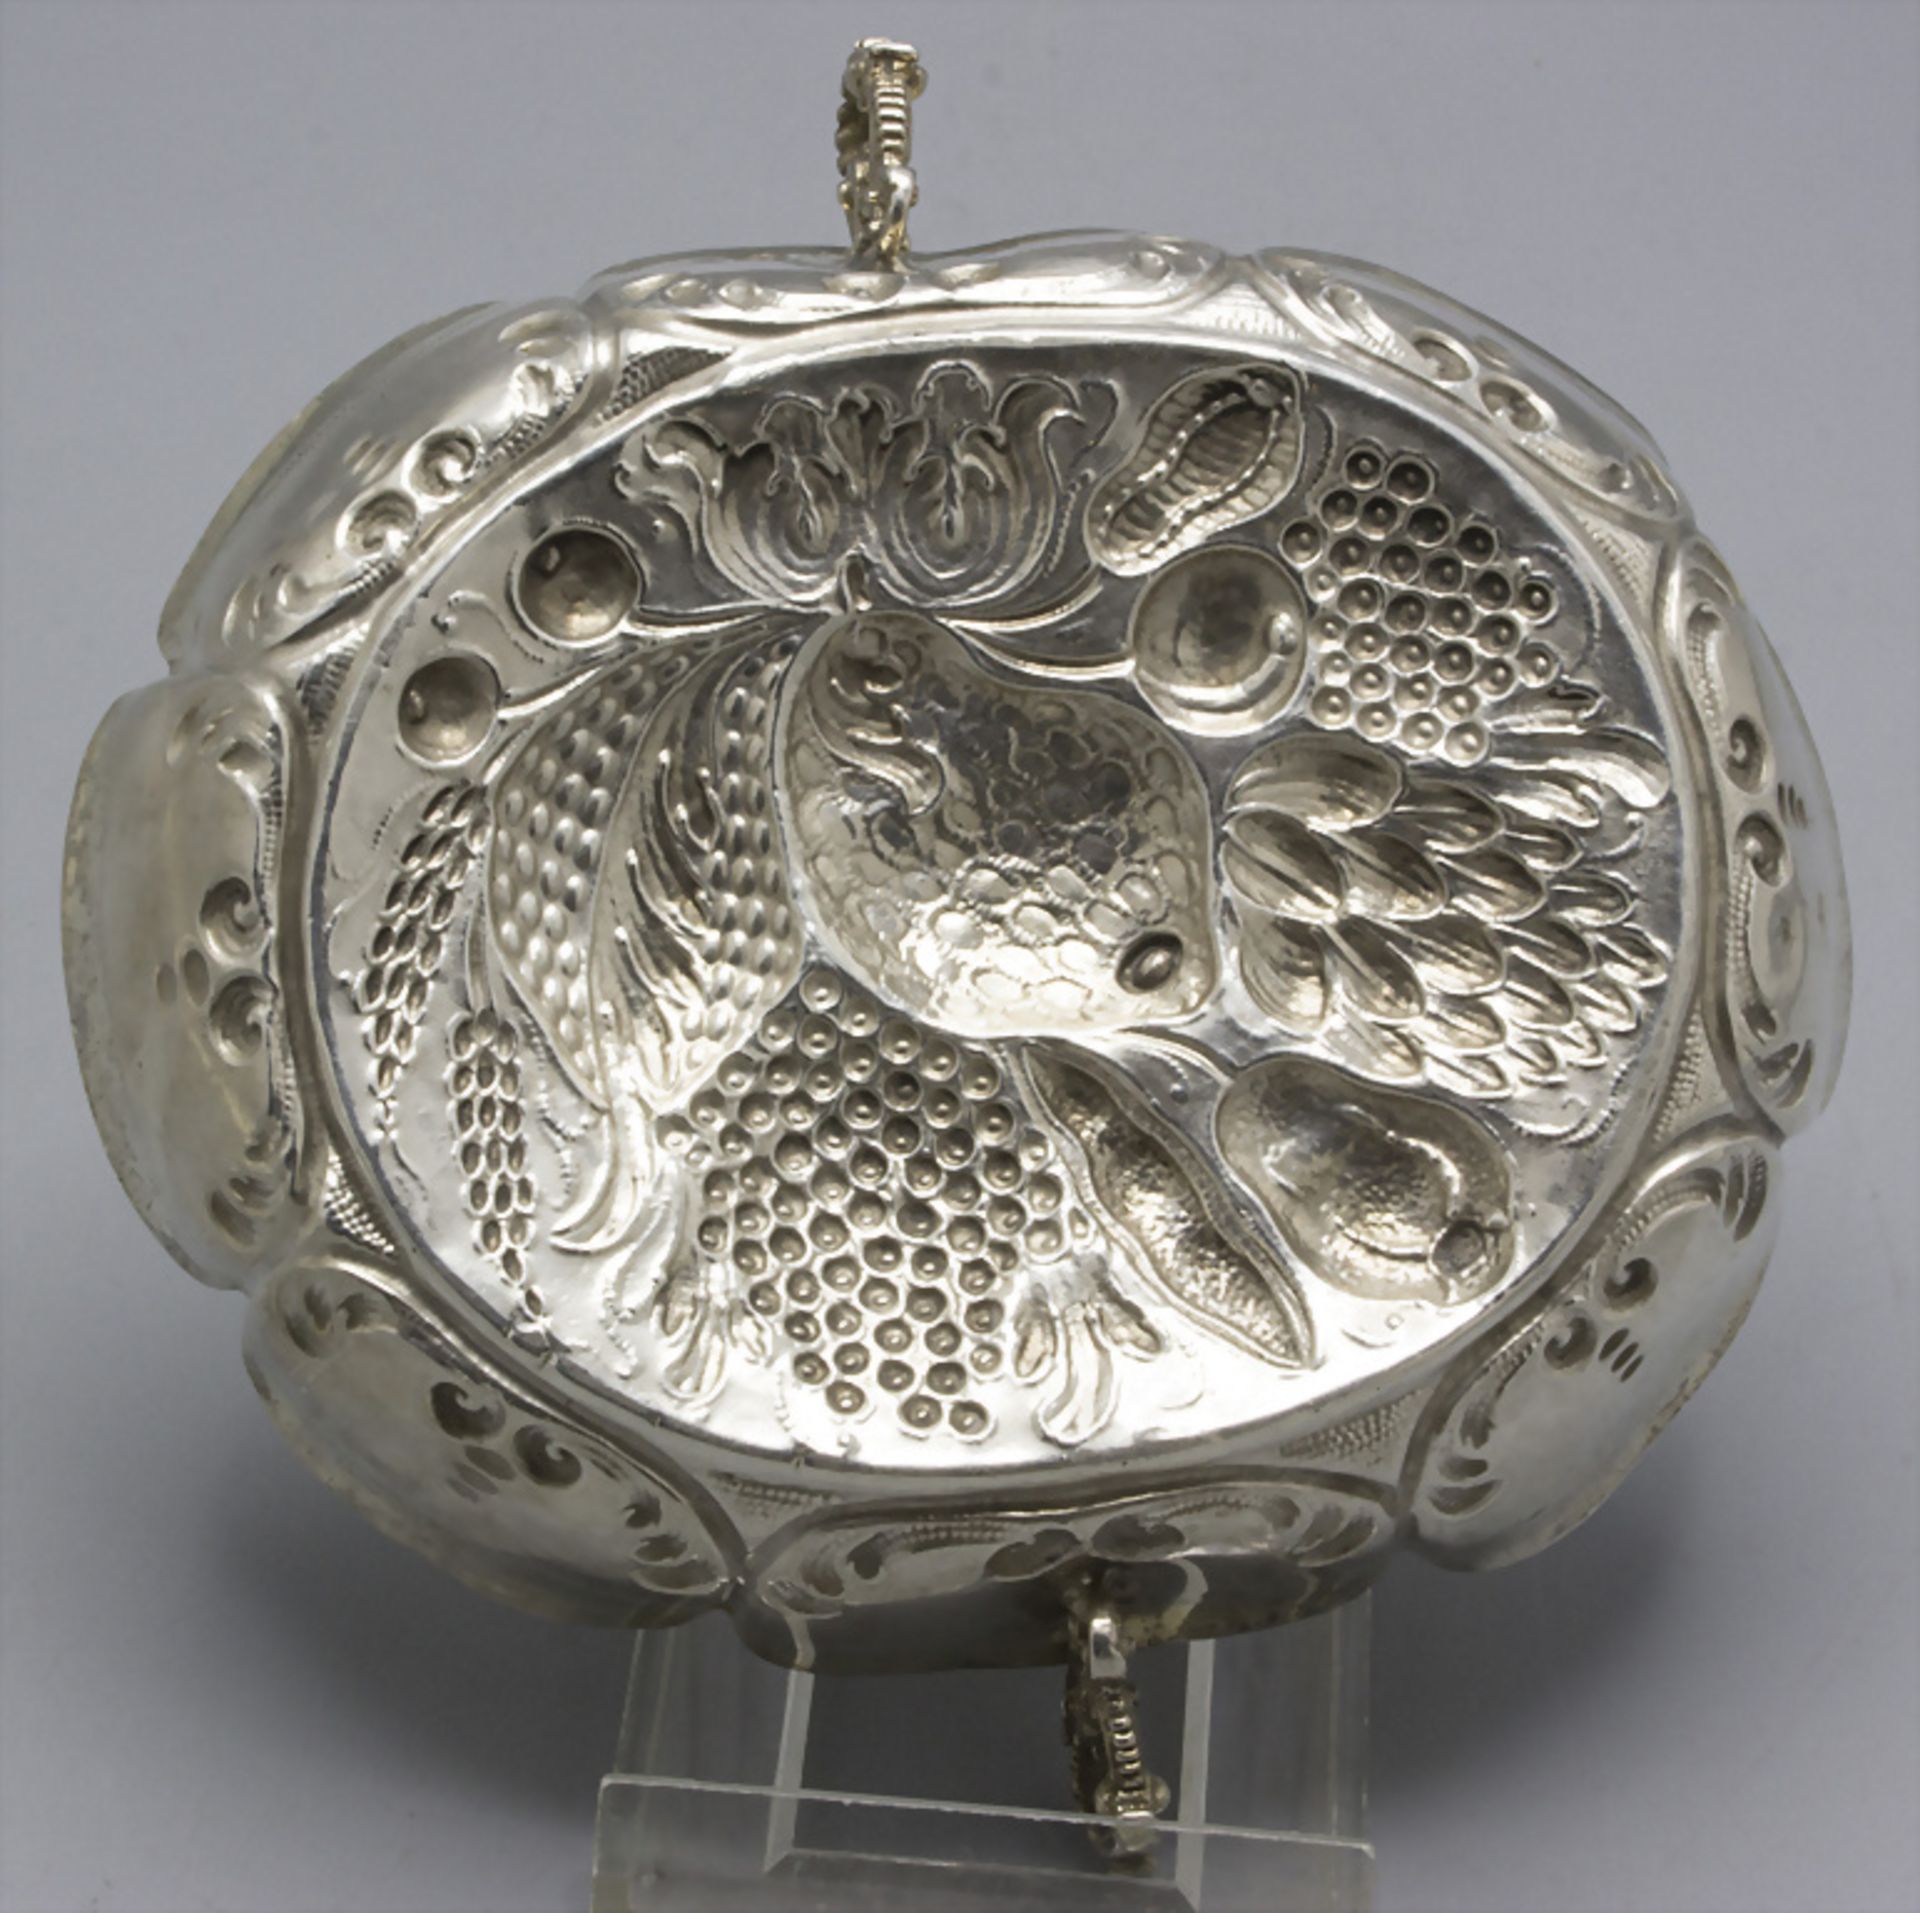 Barock Etrog Schale / A Baroque silver Etrog bowl, Johann Georg Oxner (Meister 1677-1712), München - Image 4 of 6